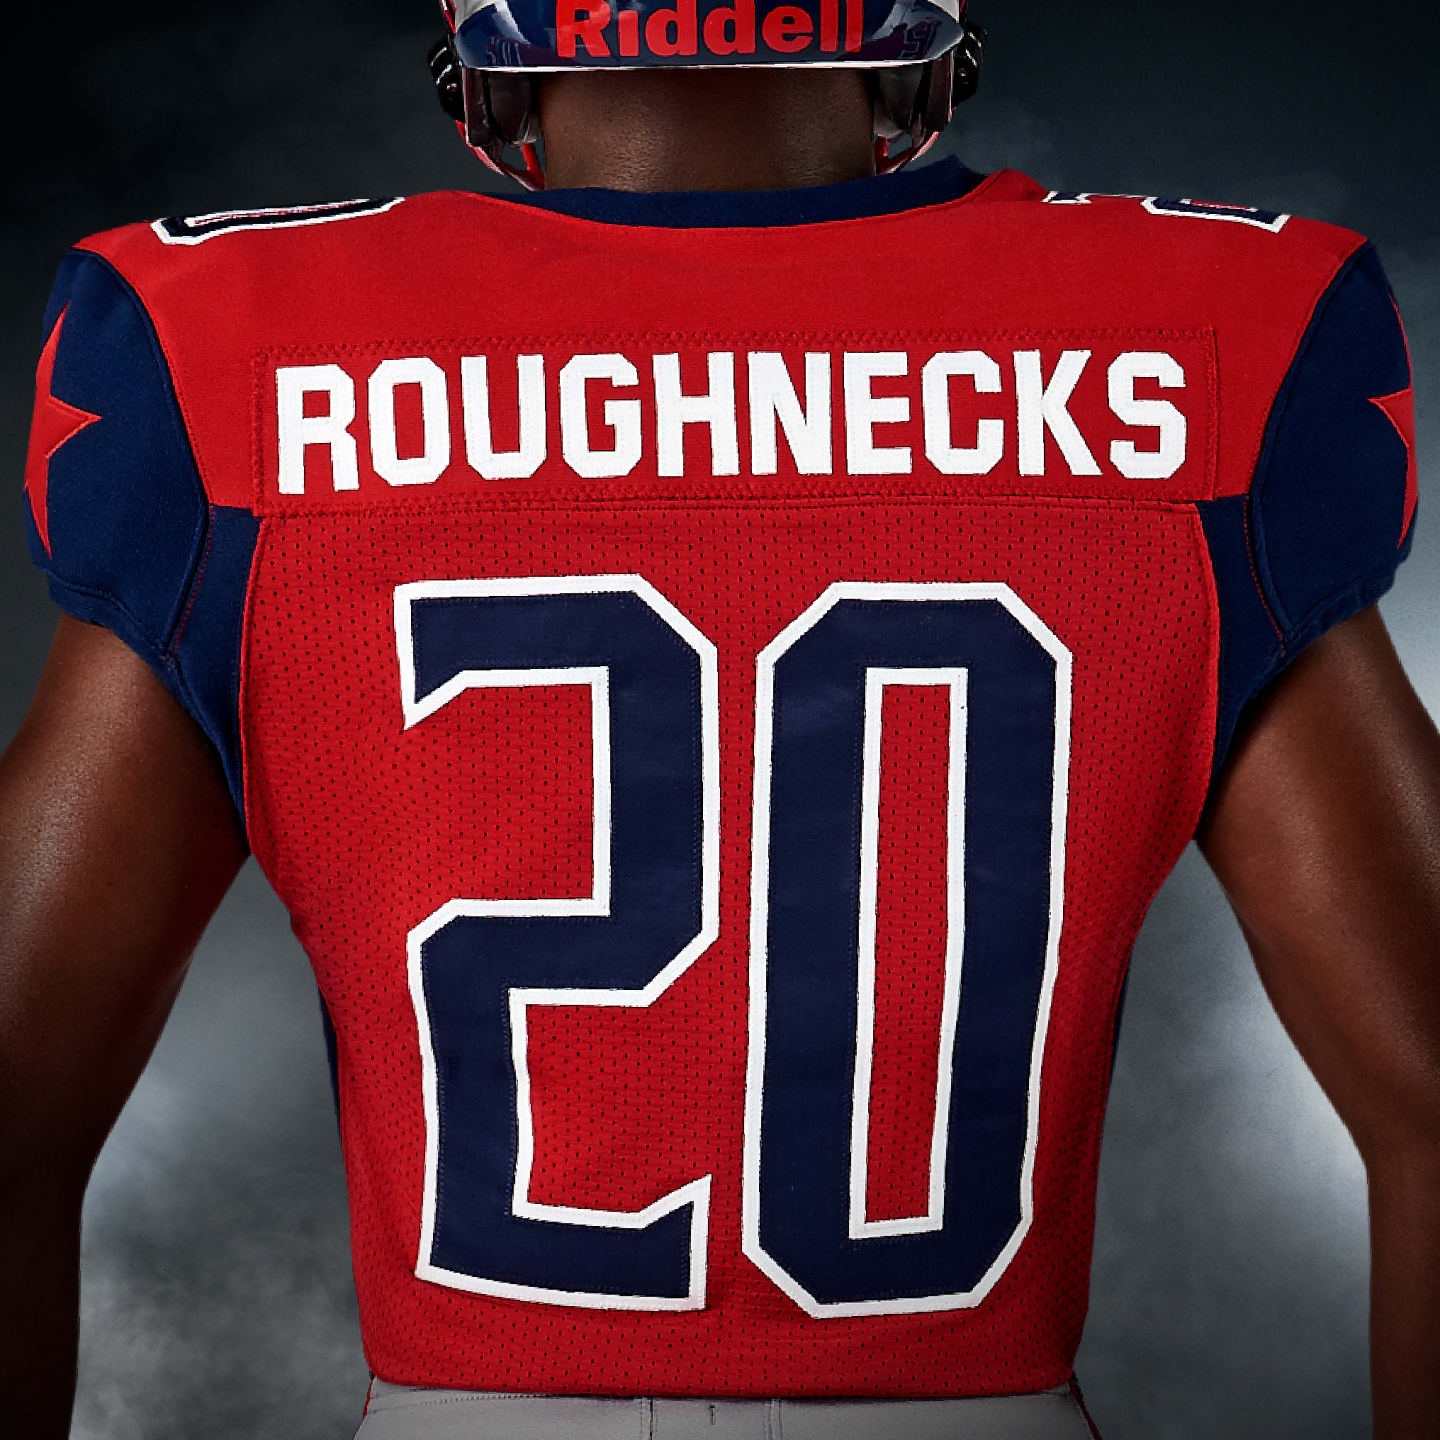 Houston Roughnecks' uniforms, helmet